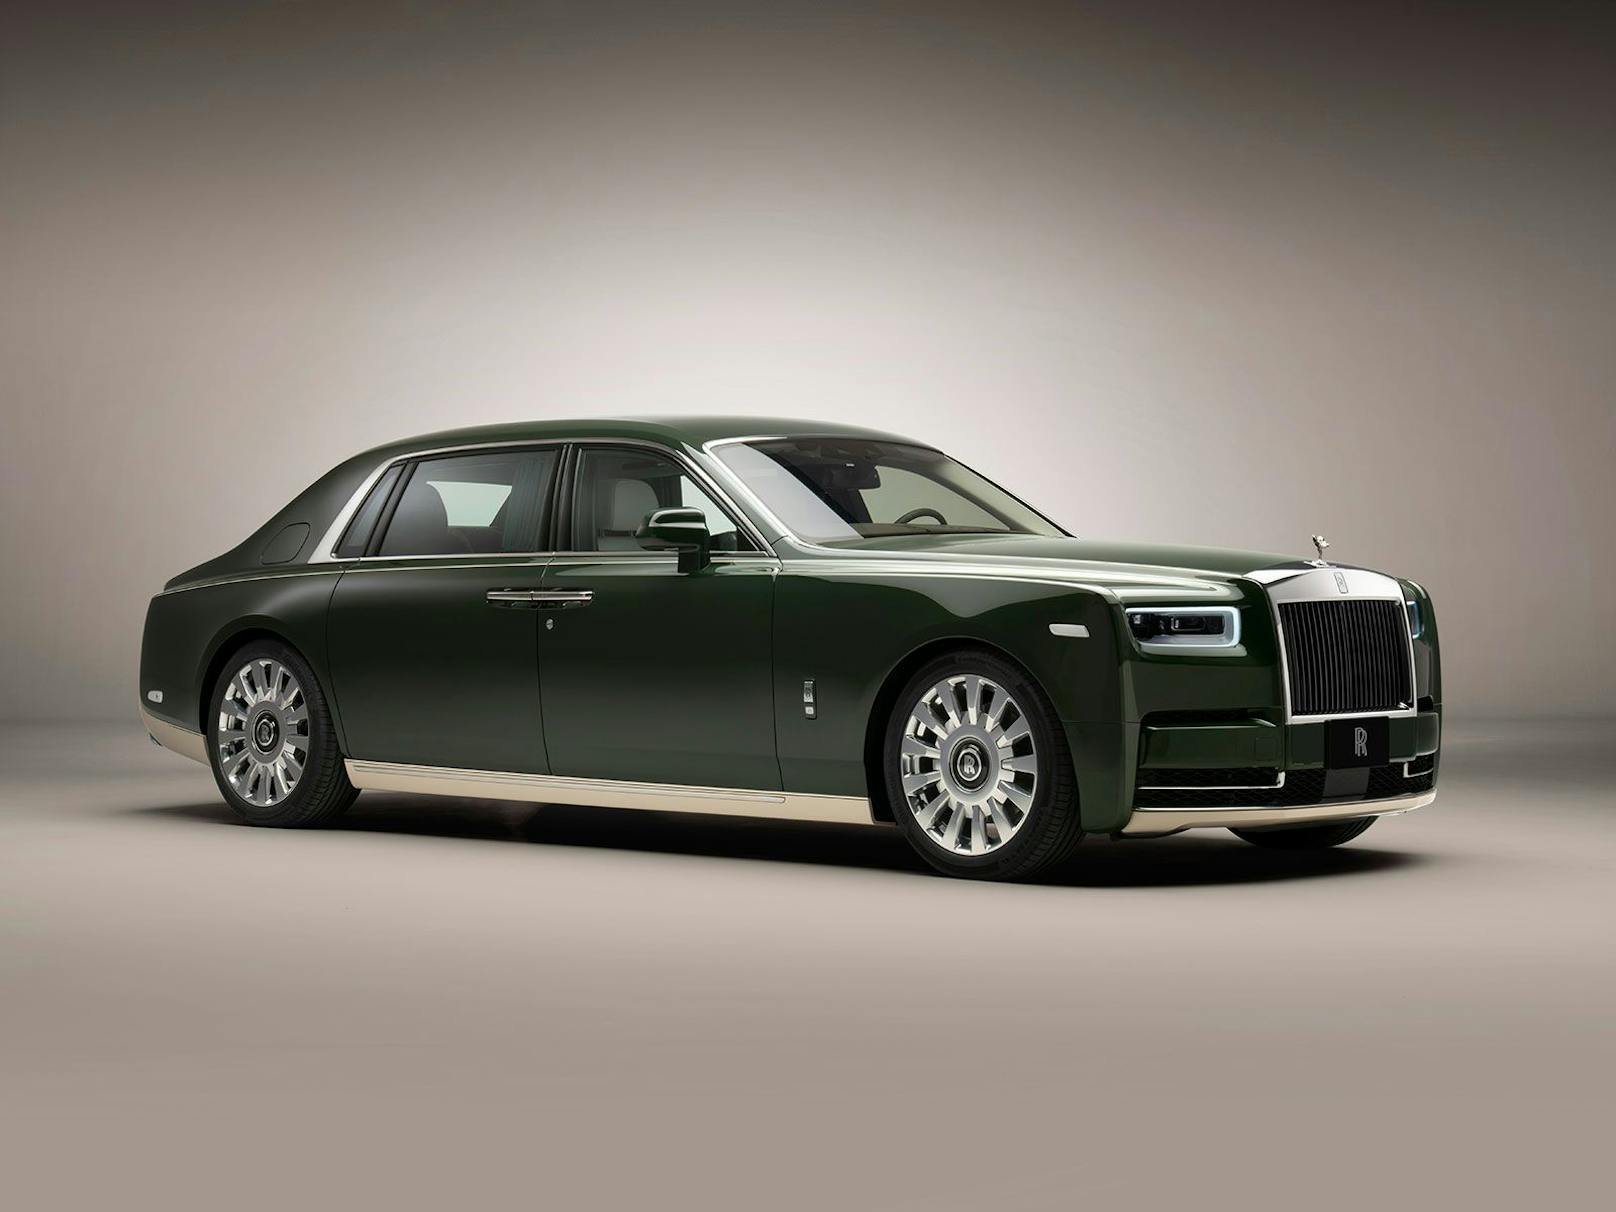 Einzelstück: Rolls Royce Phantom Oribe geht nach Japan